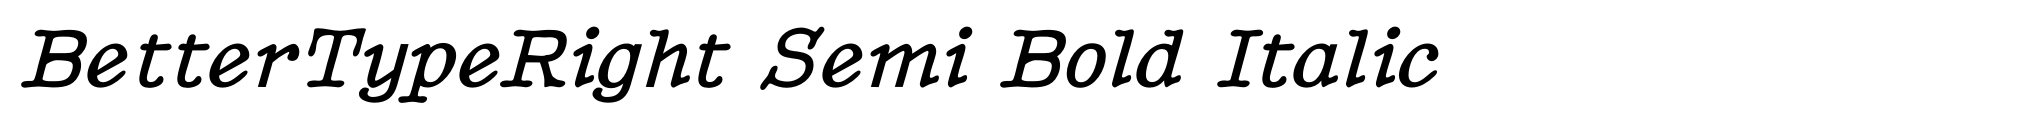 BetterTypeRight Semi Bold Italic image